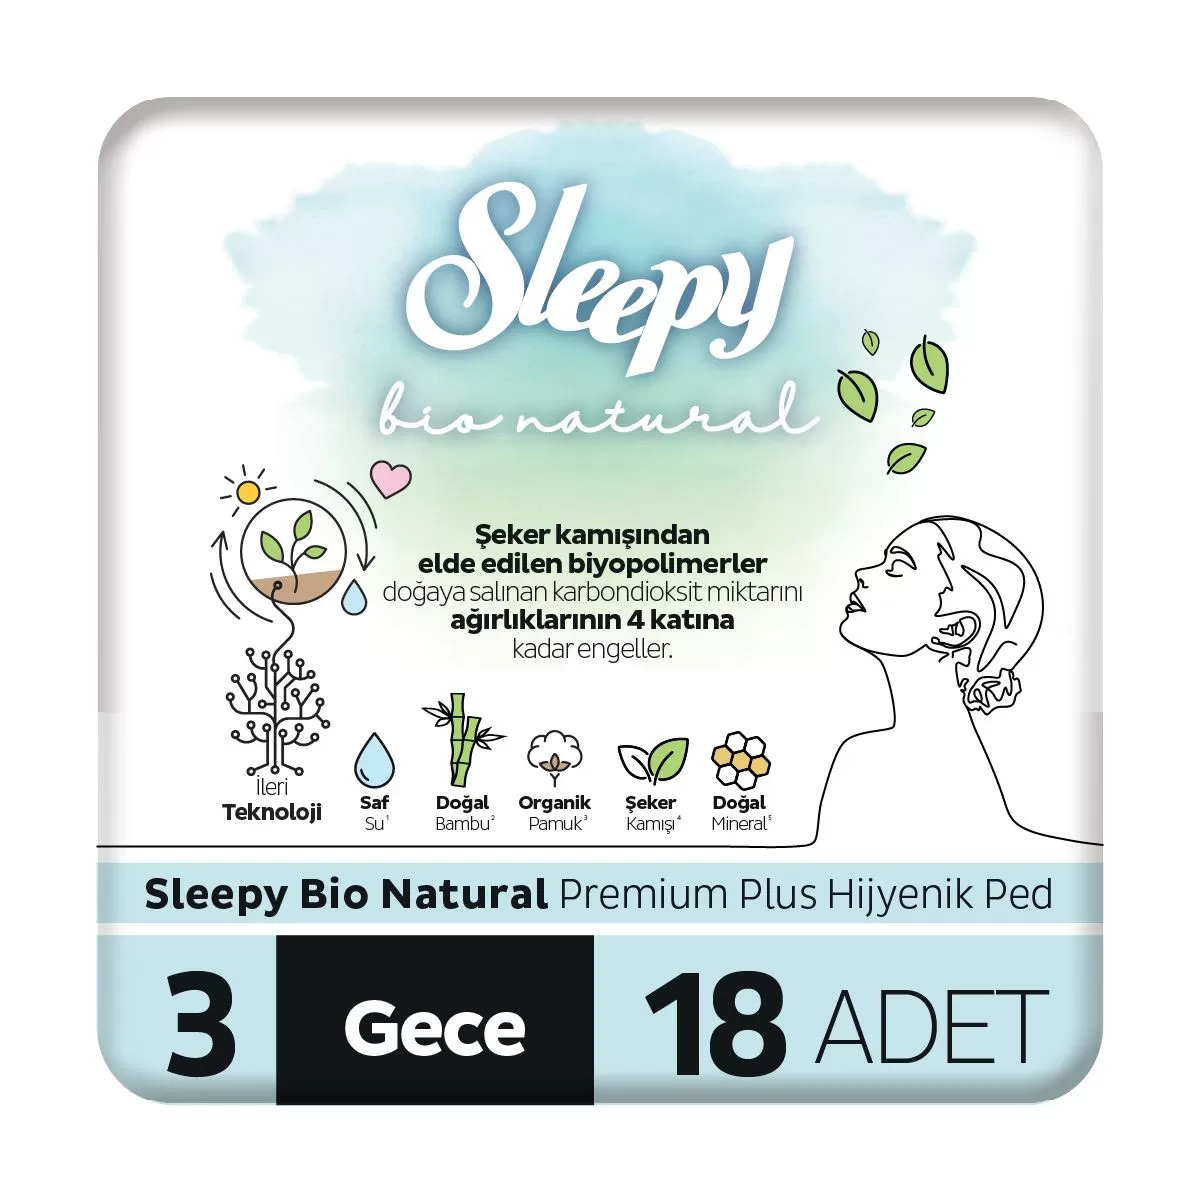 Sleepy Bio Natural Premium Plus Hijyenik Ped Gece 18x4 72 Adet Ped